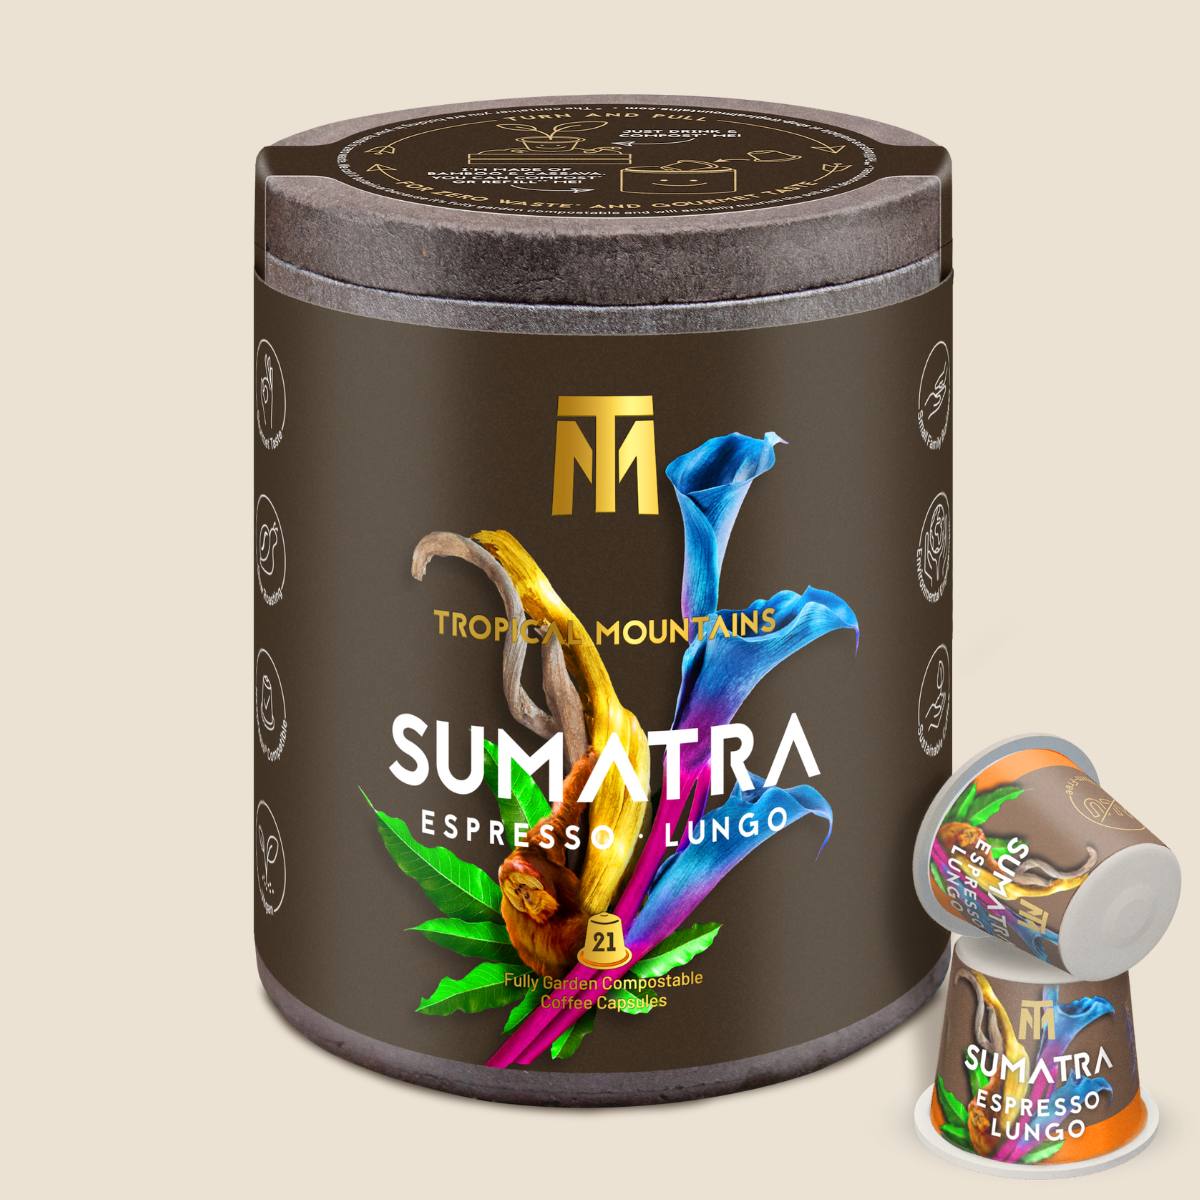 SUMATRA Espresso Lungo Organic Fair Trade Coffee Capsules 